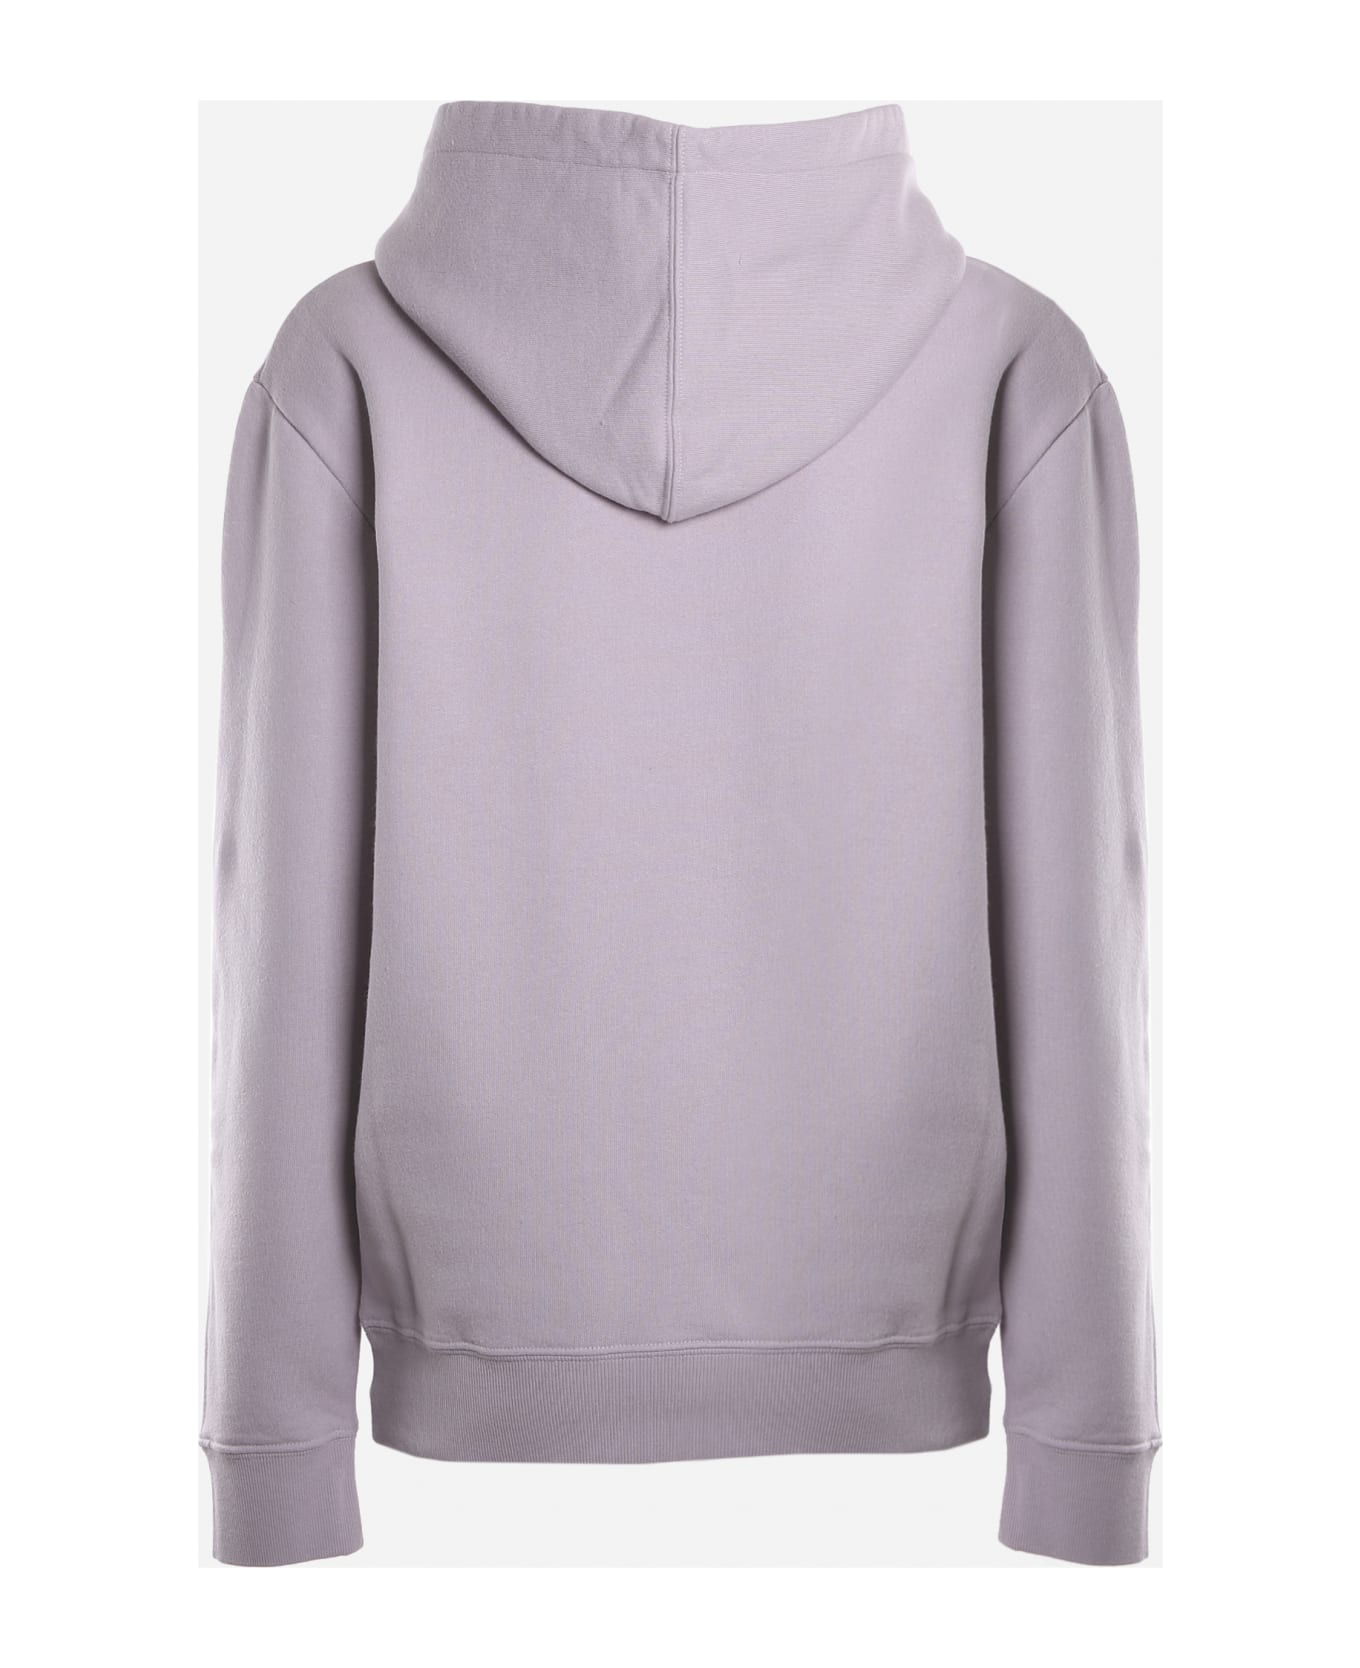 Saint Laurent Cotton Sweatshirt With Logo Print - Lilac